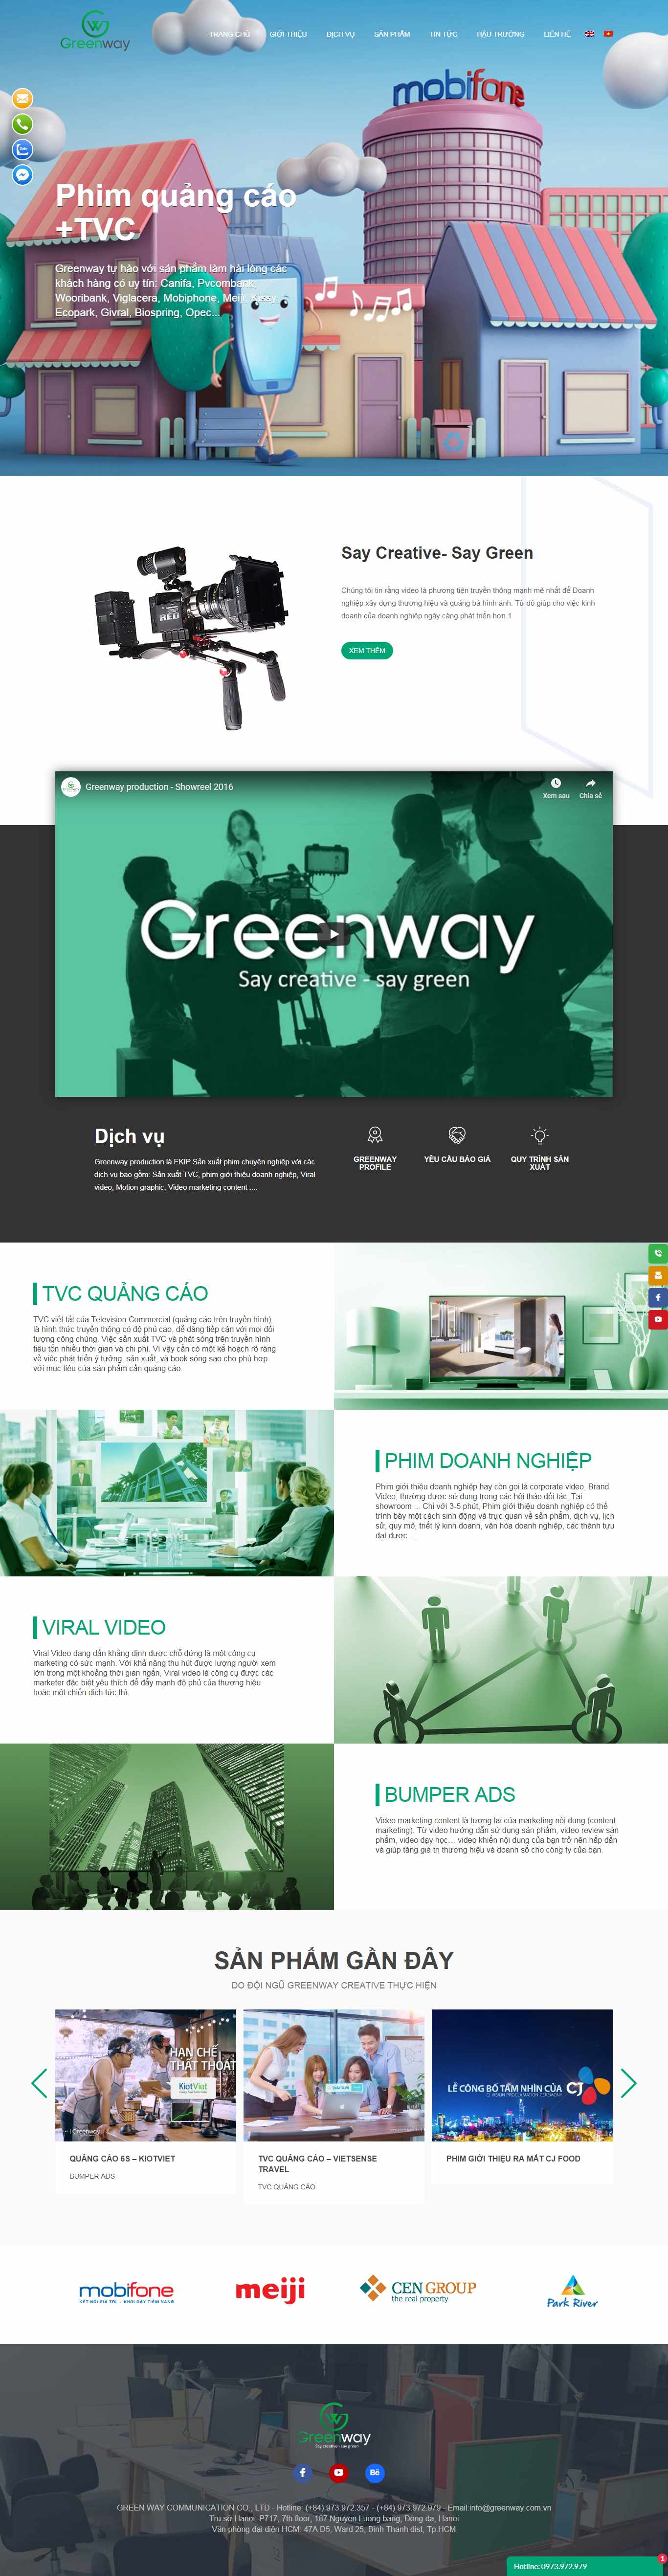 Thiết kế Website quảng cáo tvc - www.greenway.com.vn